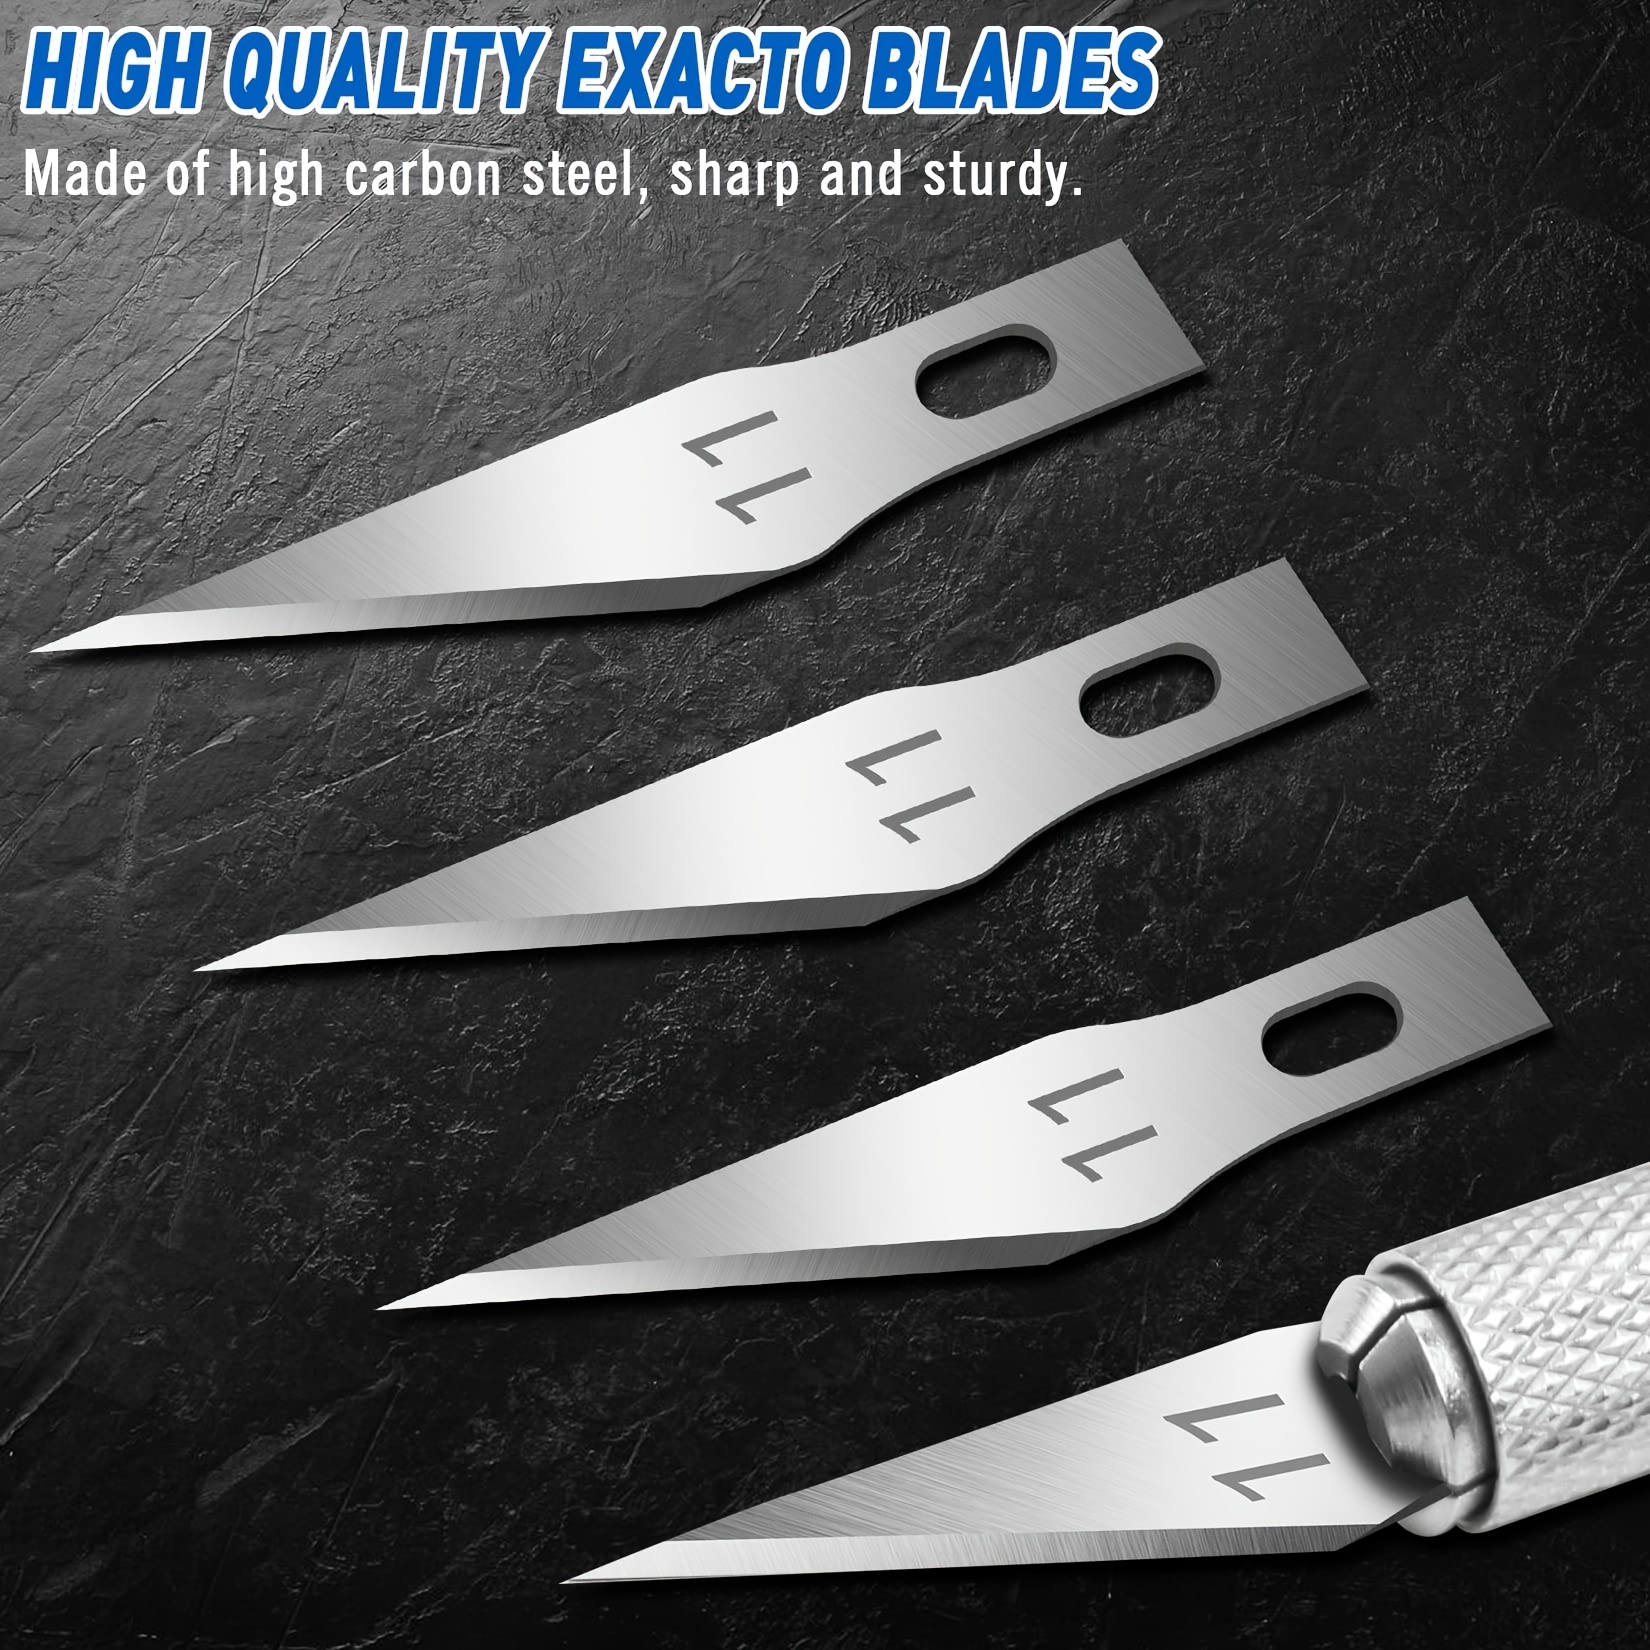 50 PCS Exacto Knife Blades, High Carbon Steel #11 Refill